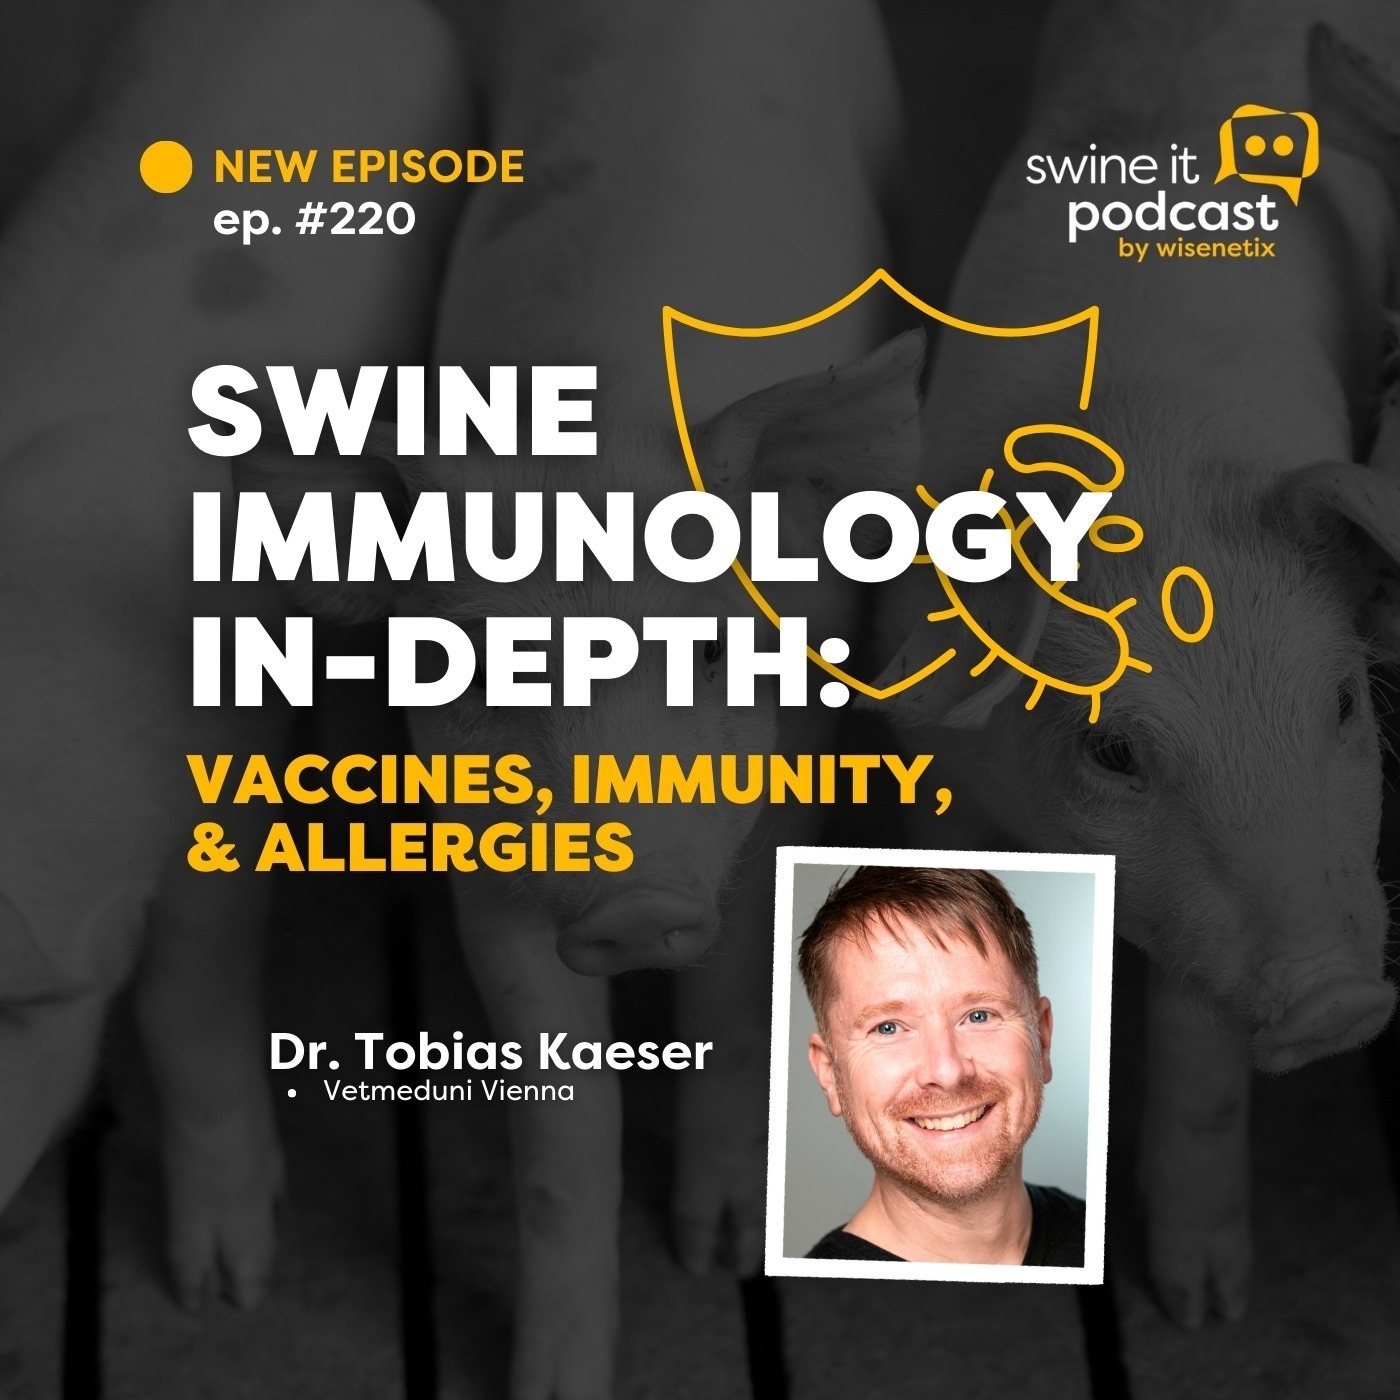 Dr. Tobias Kaeser: Swine Immunology Insights | Ep. 220